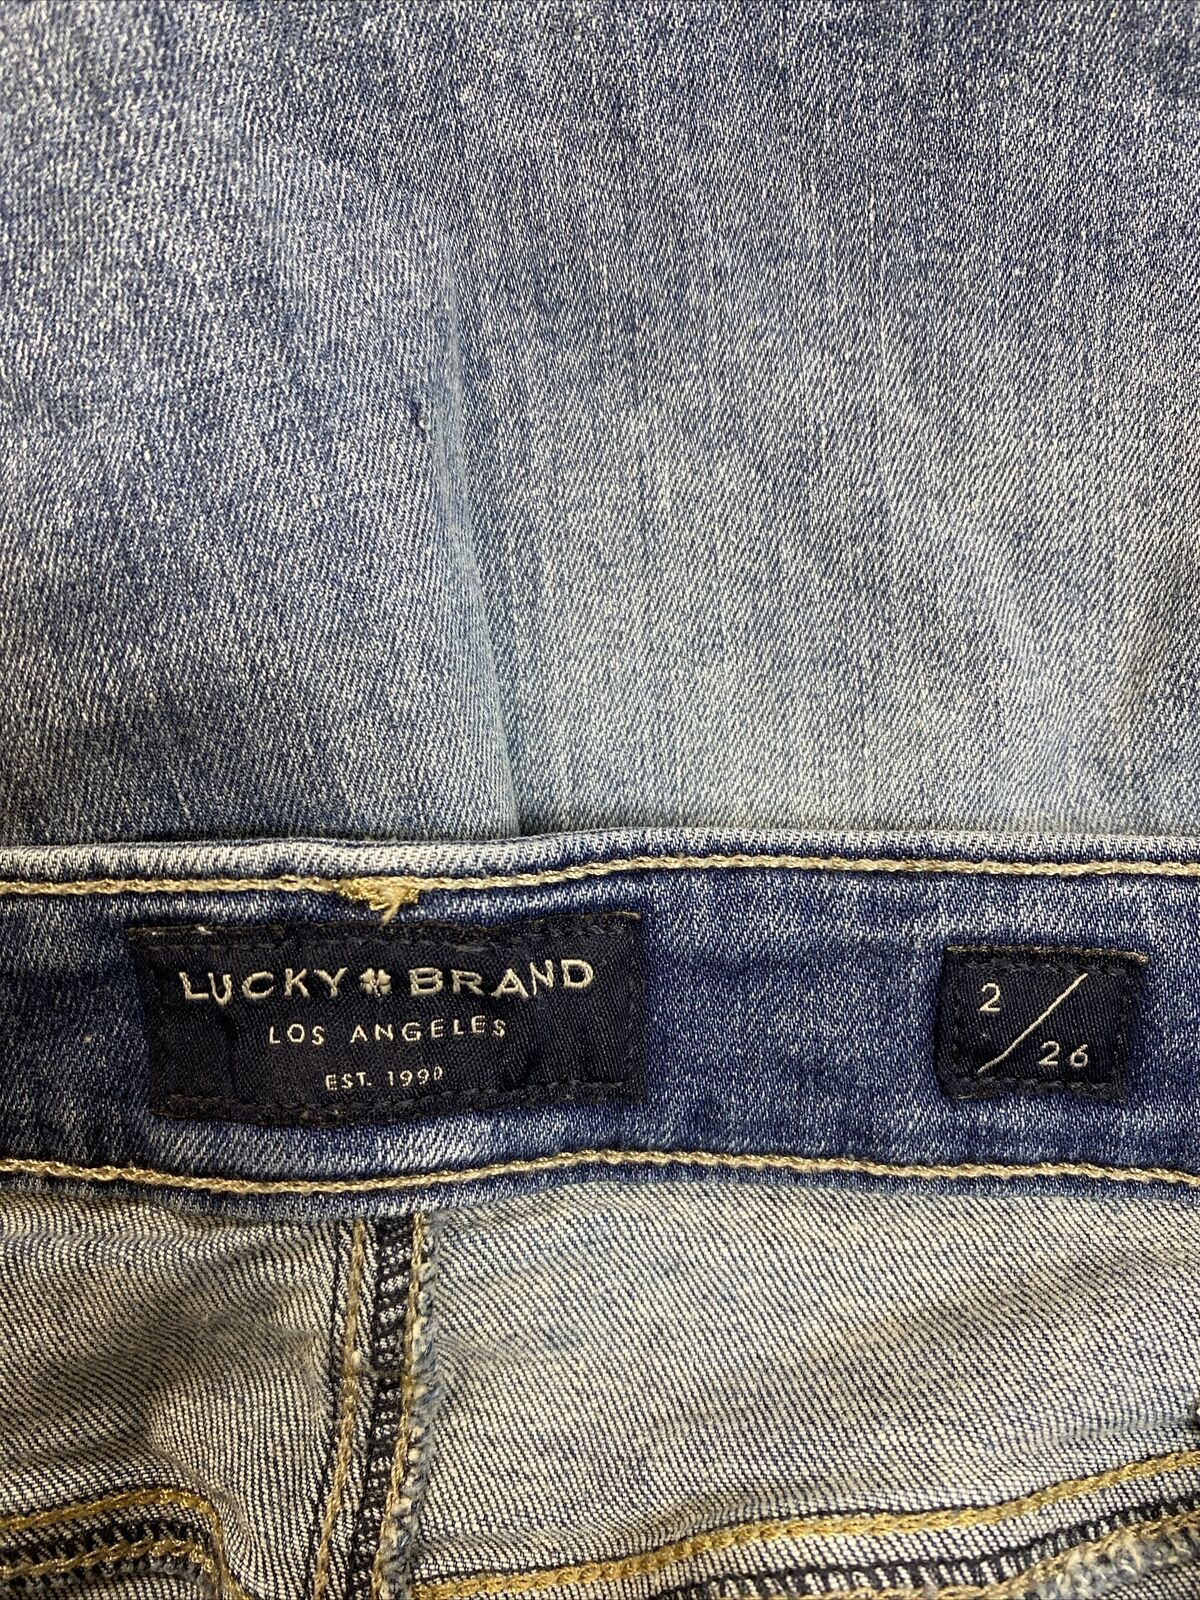 Lucky Brand Women's Medium Wash Distressed Denim Jean Shorts - 2/26